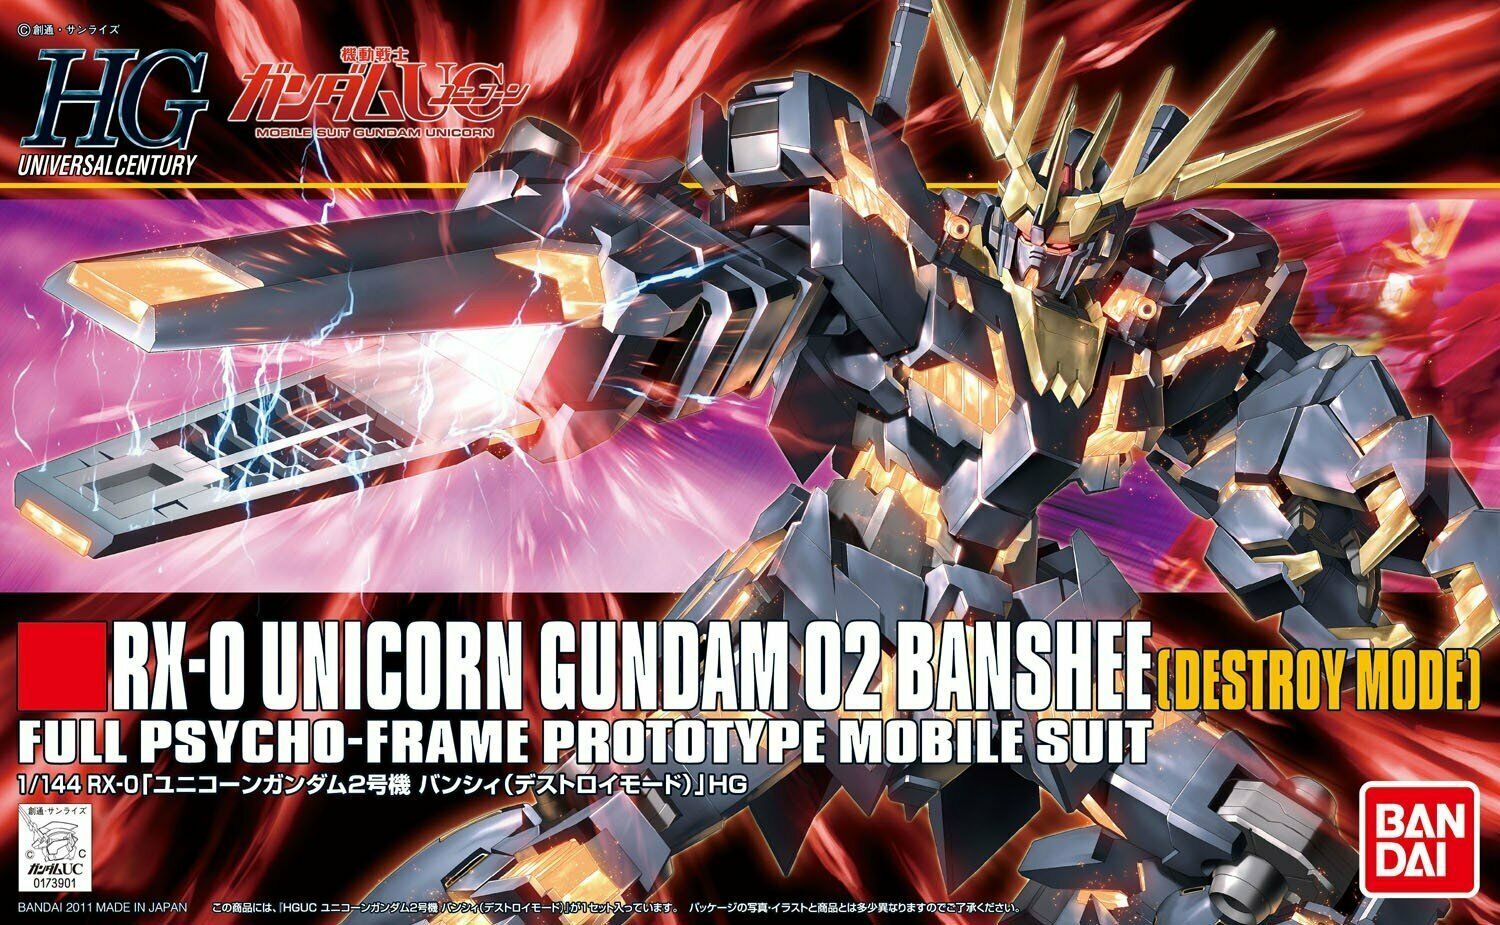 GUNDAM - HGUC 1/144 - RX-0 Unicorn 02 Banshee Destroy Mode